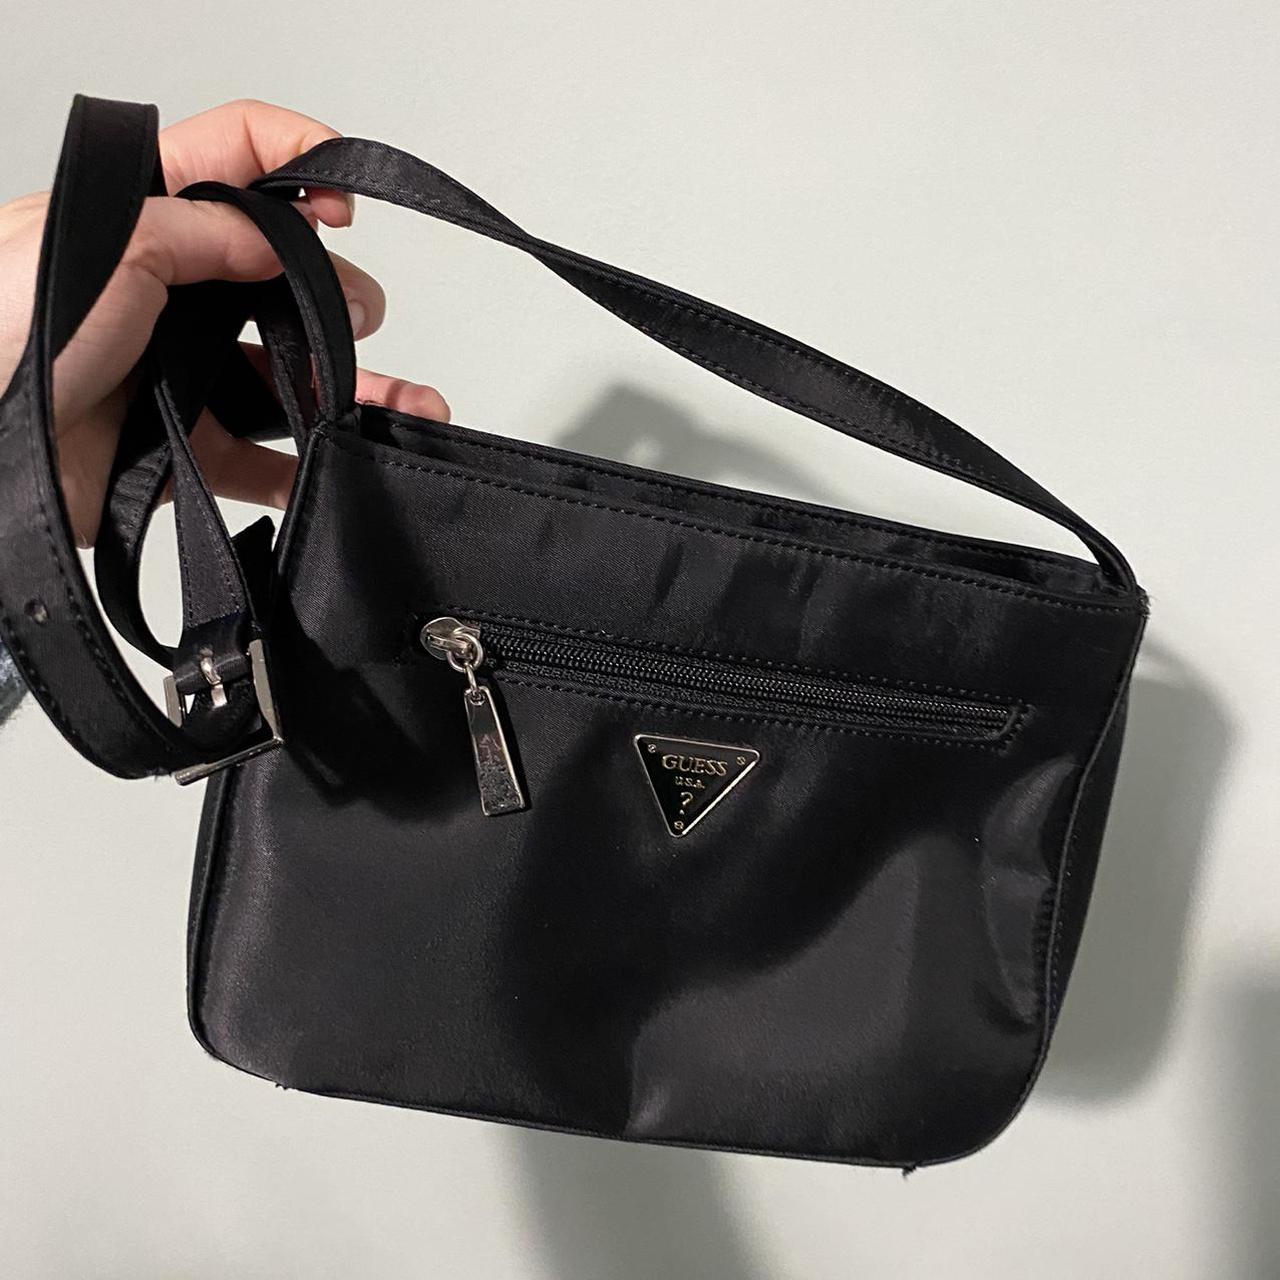 Product Image 1 - Small black guess bag

Crossbody bag